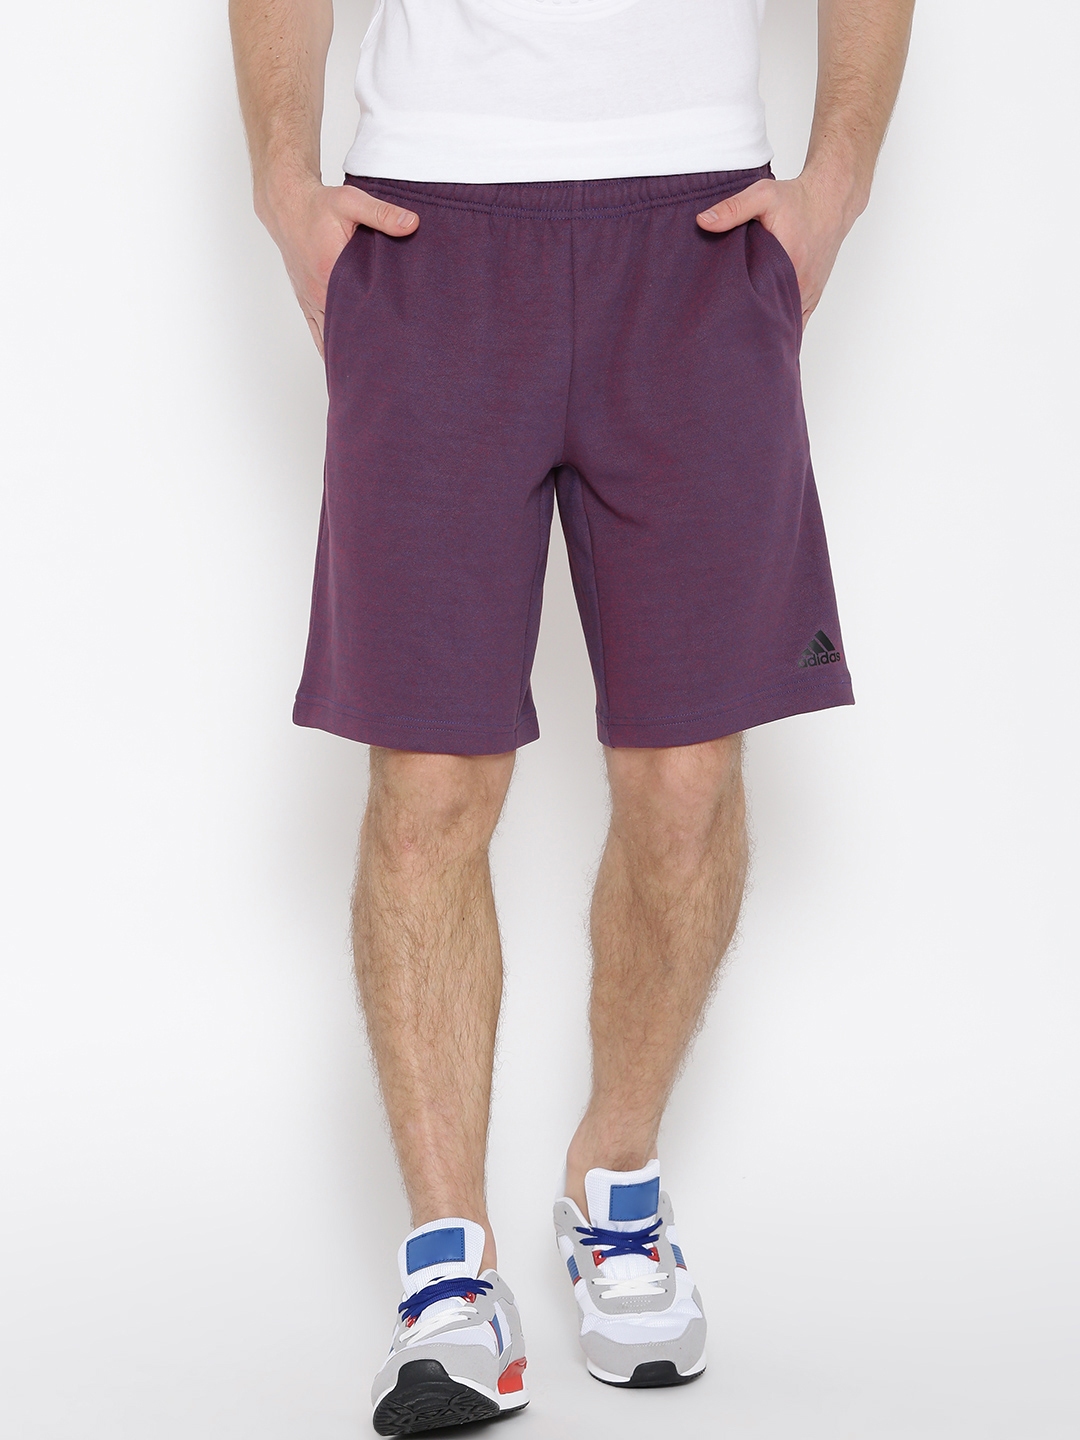 purple adidas shorts mens